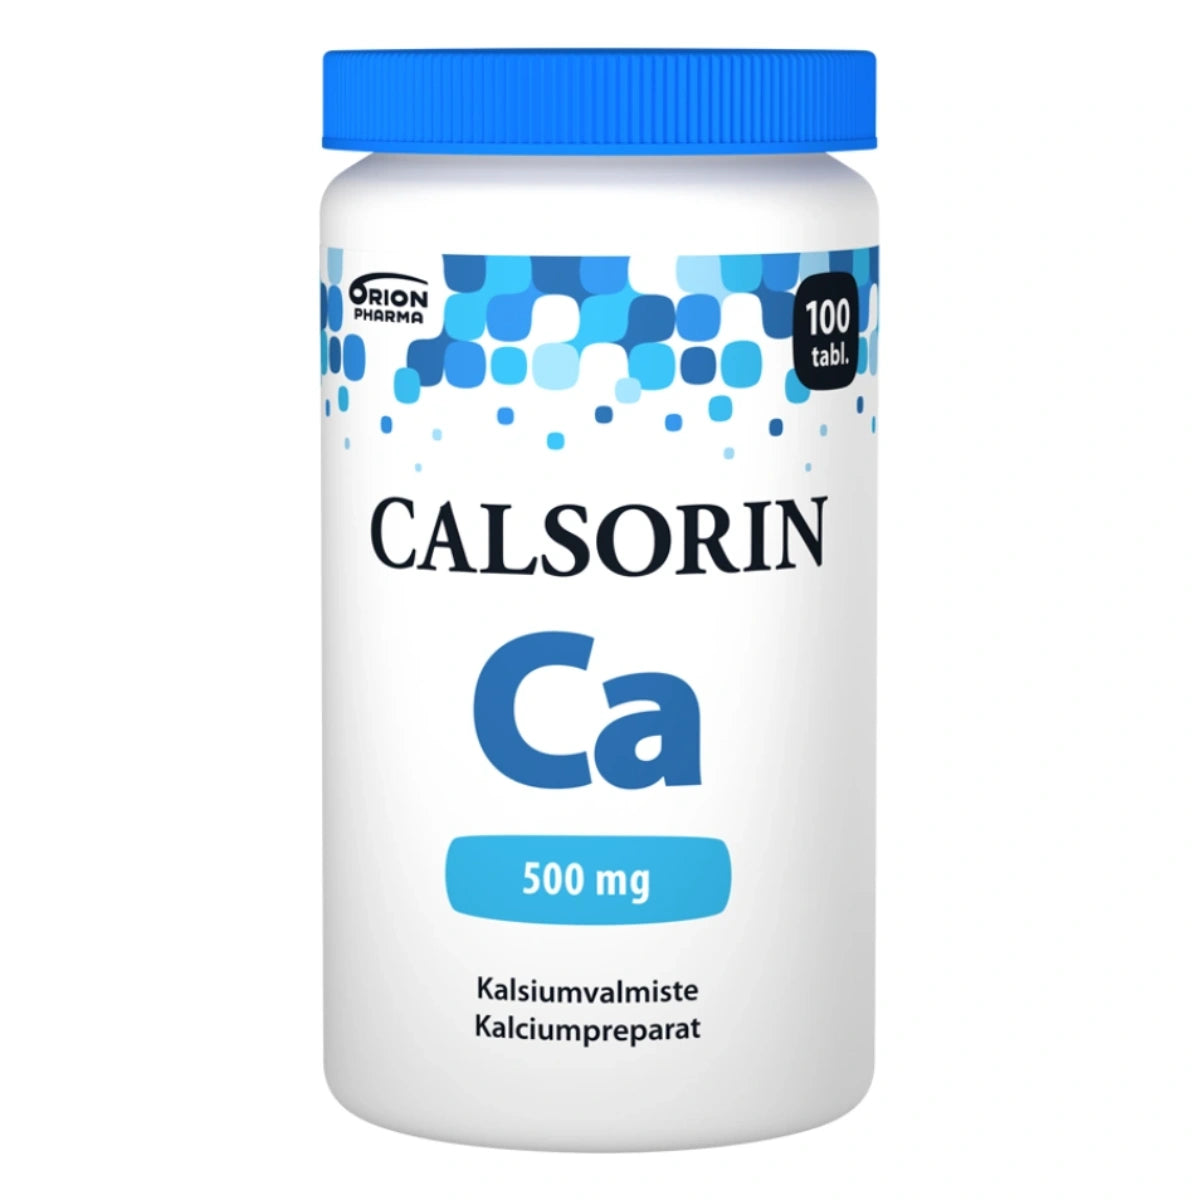 CALSORIN 500 mg tabletti 100 kpl helposti nieltävä kalsiumtabletti